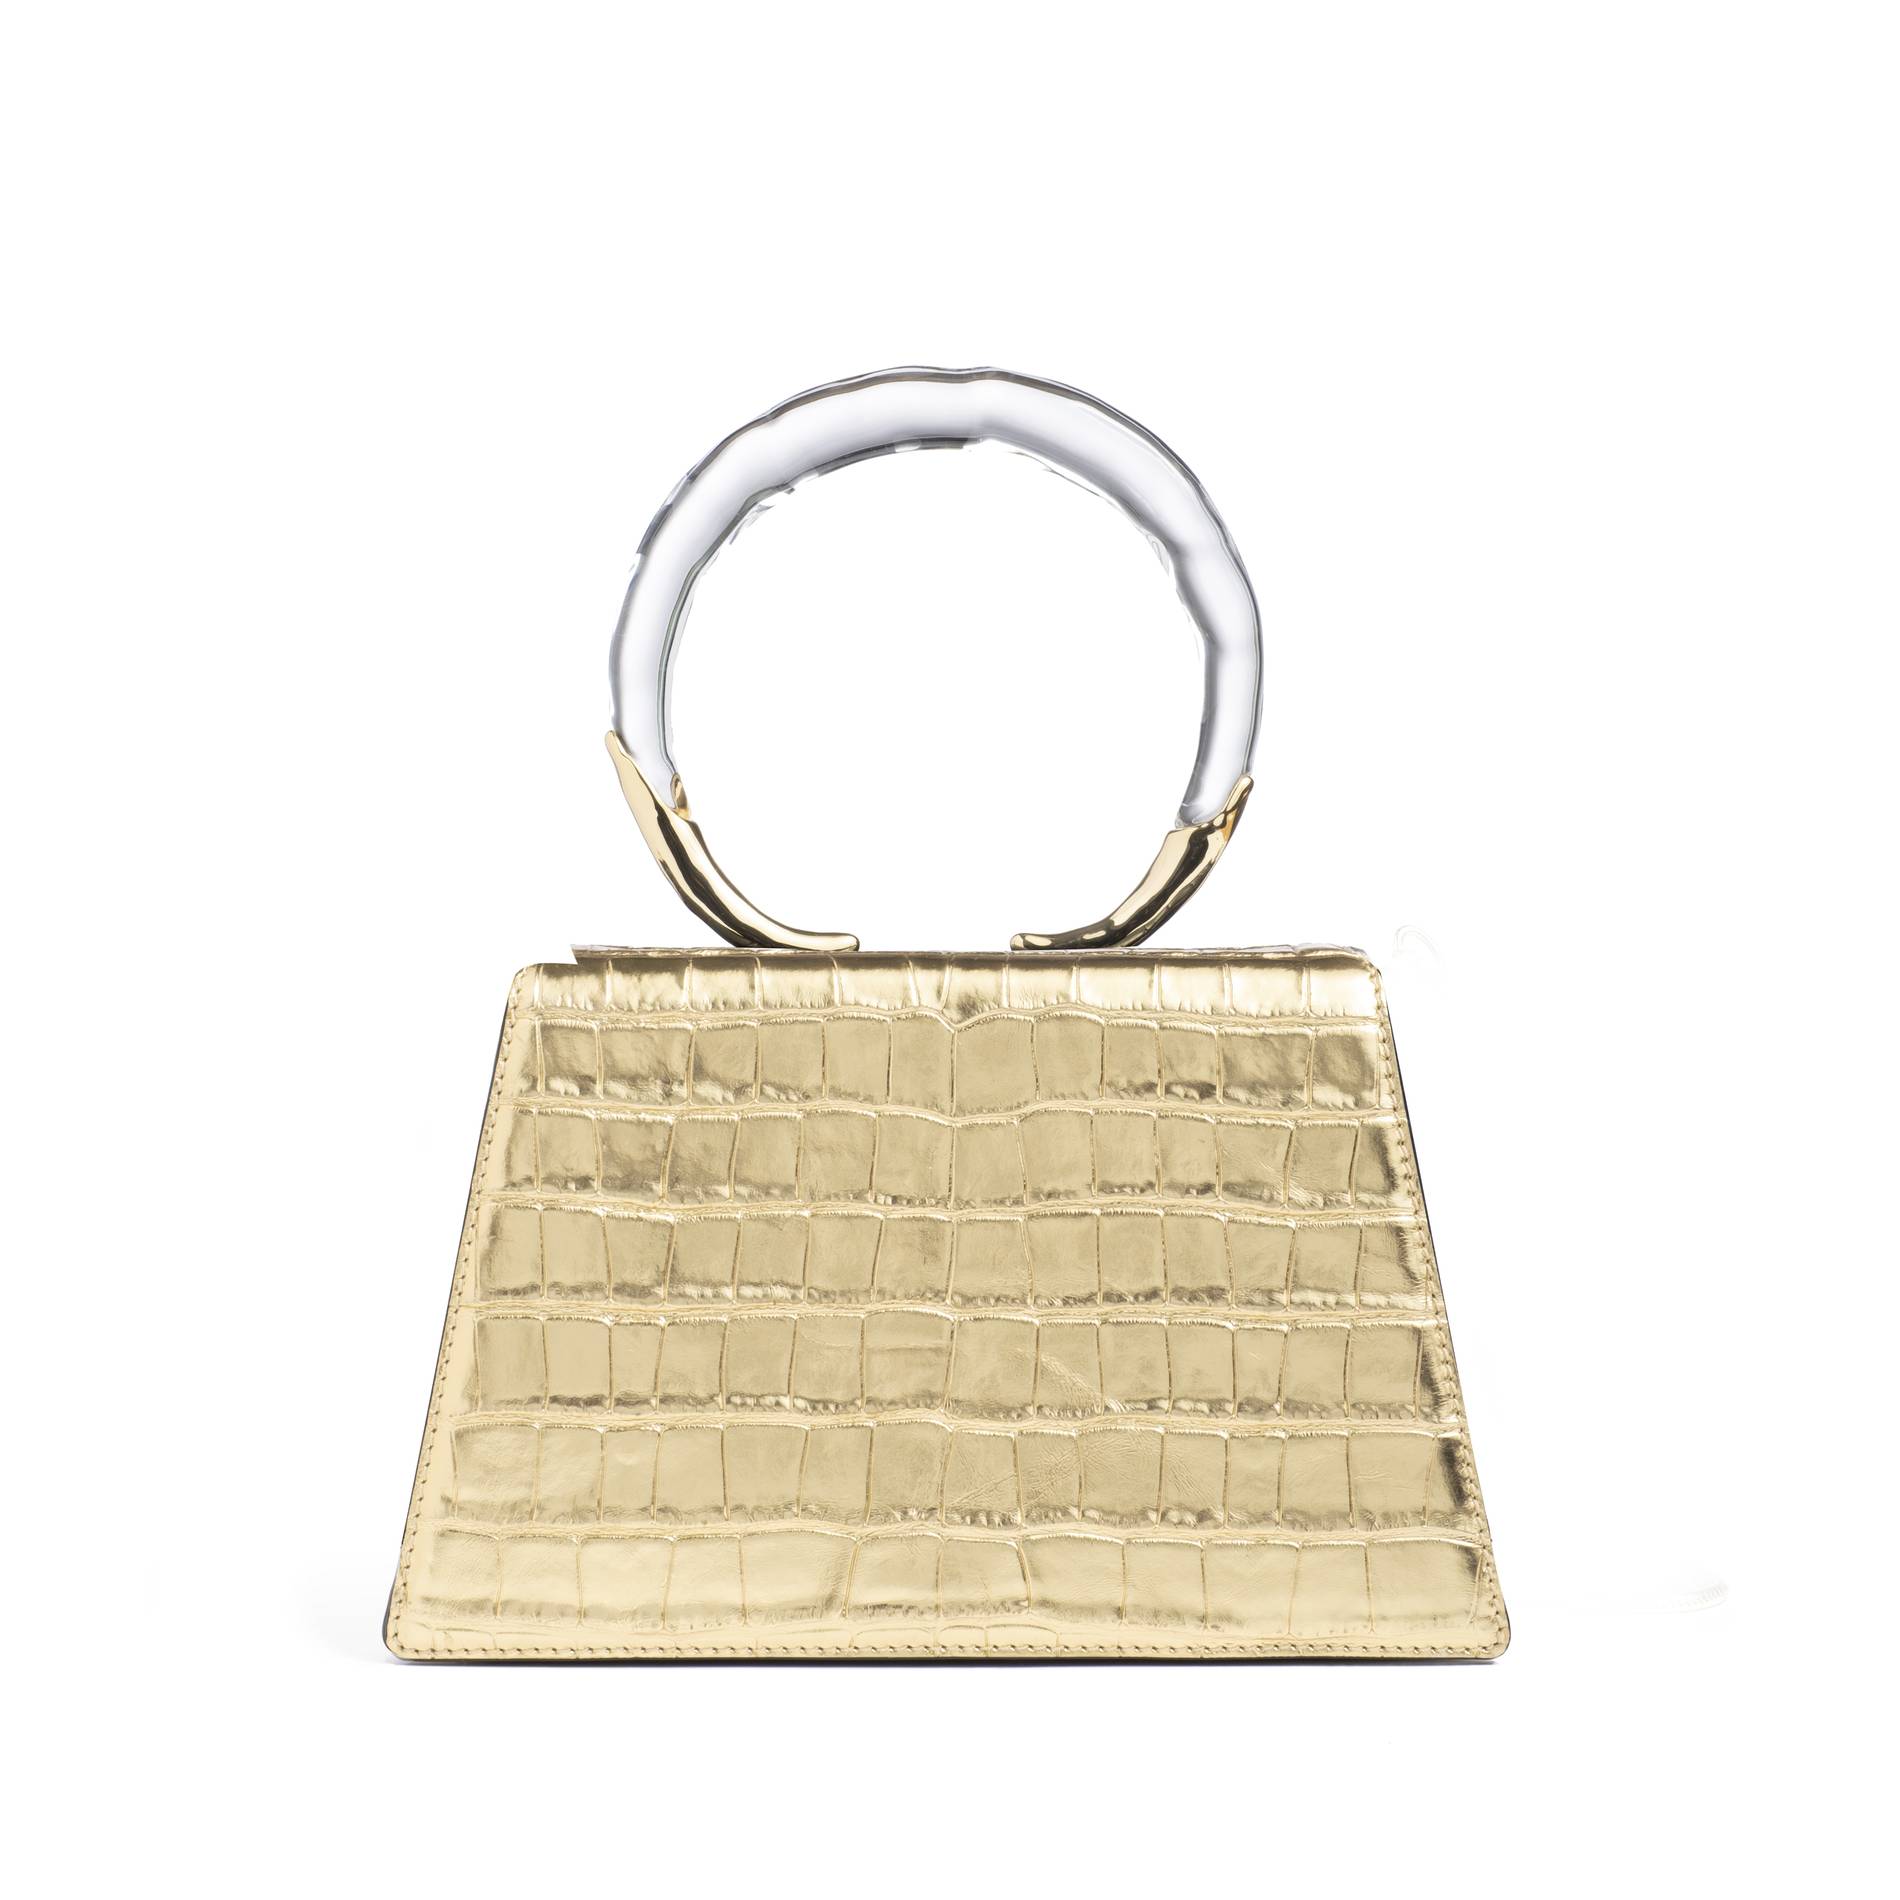 alexis bittar the lucite quad handbag in gold croc leather